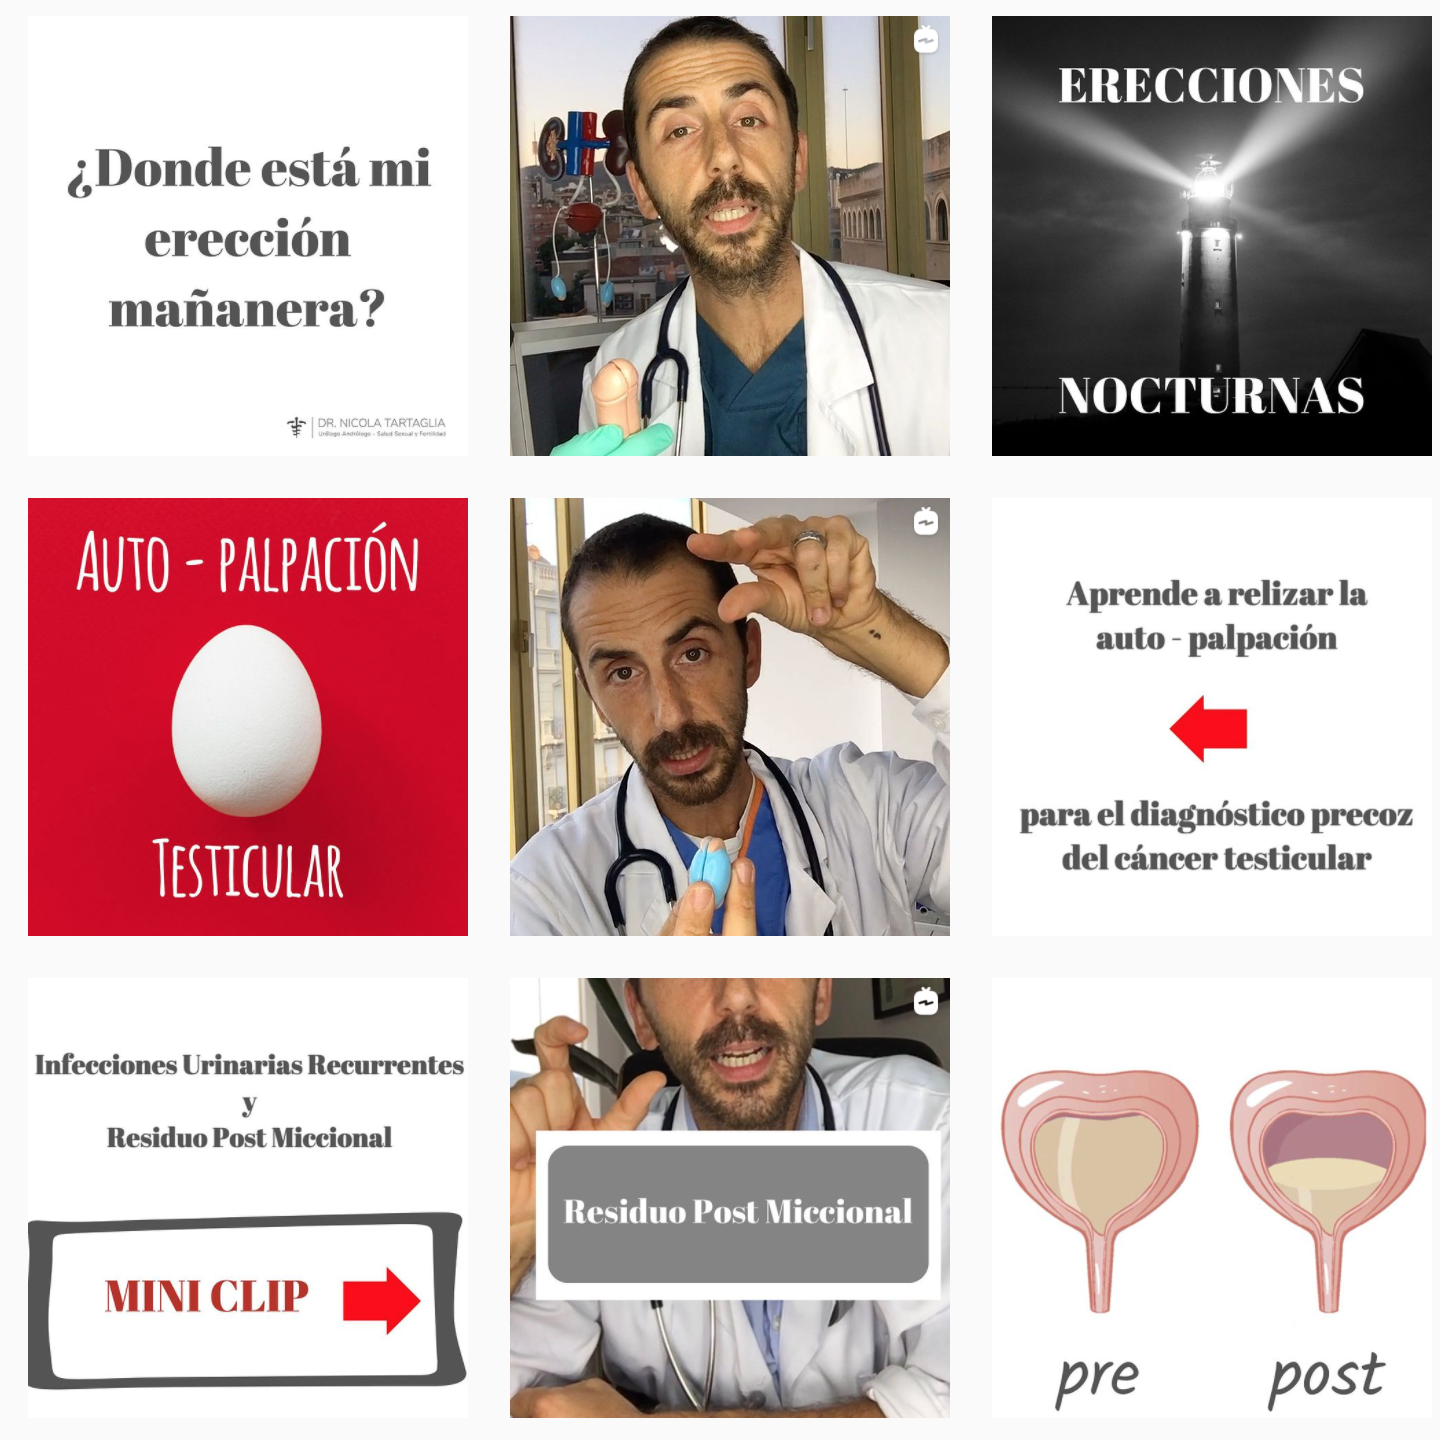 dr nicola tartaglia urologo barcelona